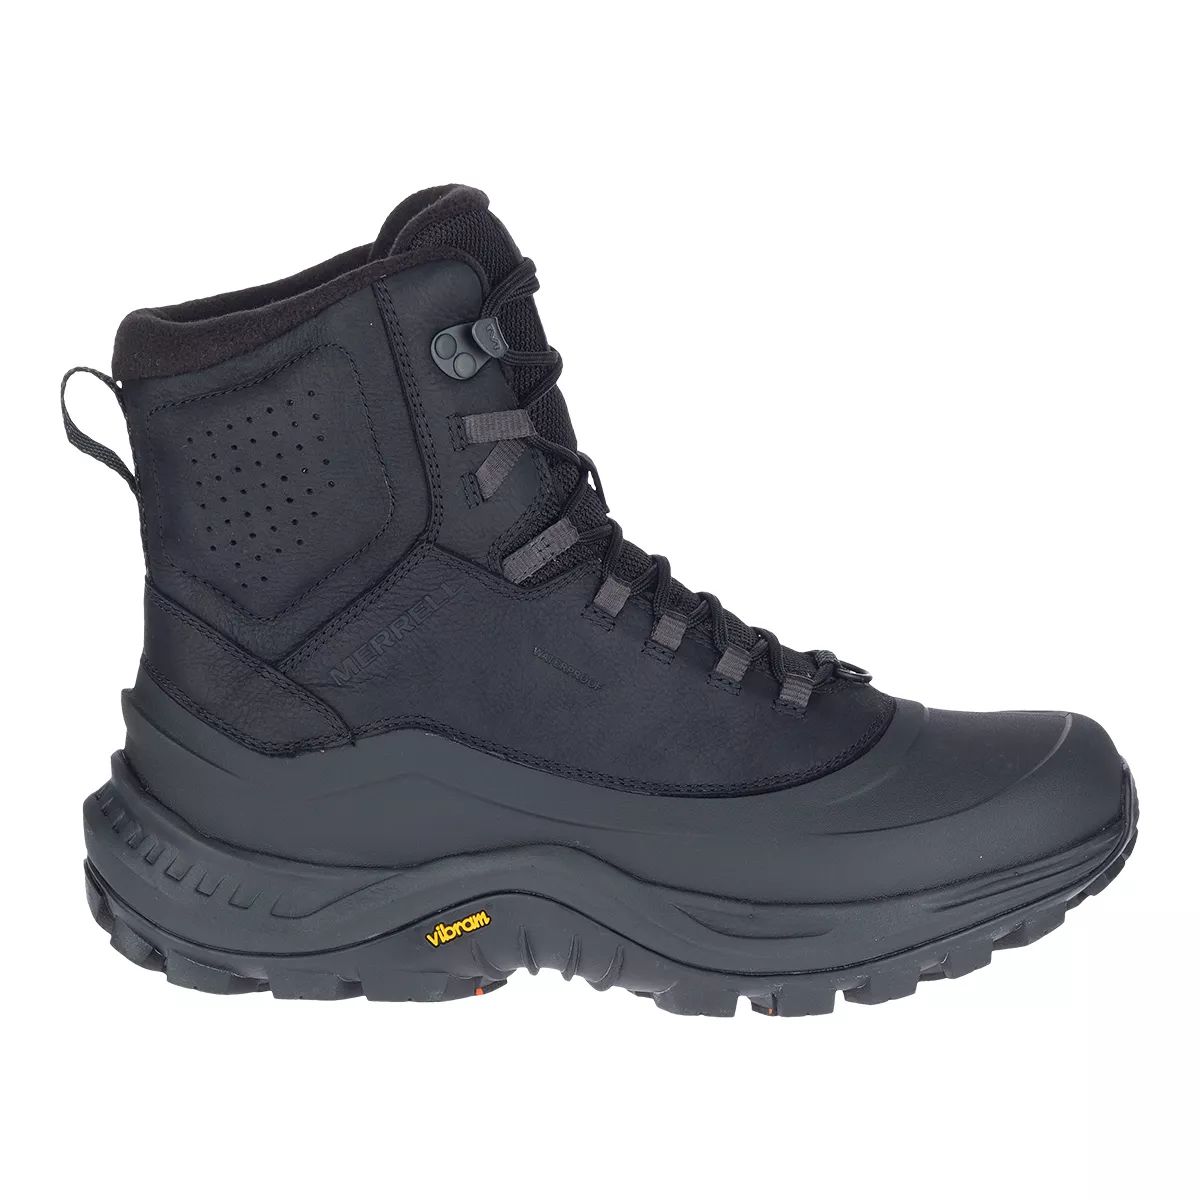 Merrell Men's Thermo Overlook 2 Mid Winter Boots  Top Waterproof Insulated Non Slip